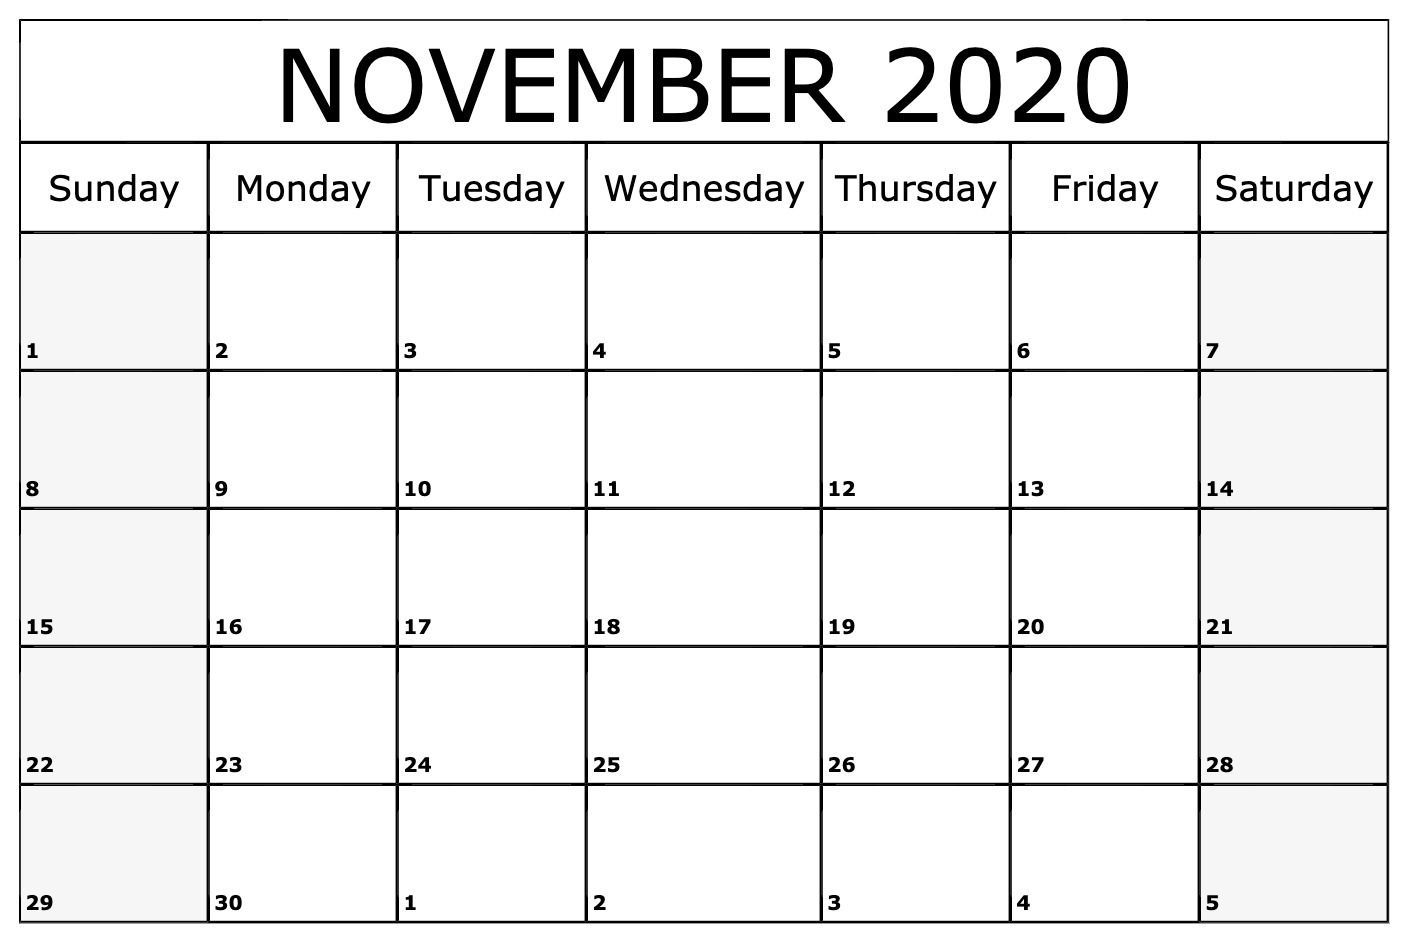 November 2020 Calendar Wallpapers   Top November 2020 1406x931